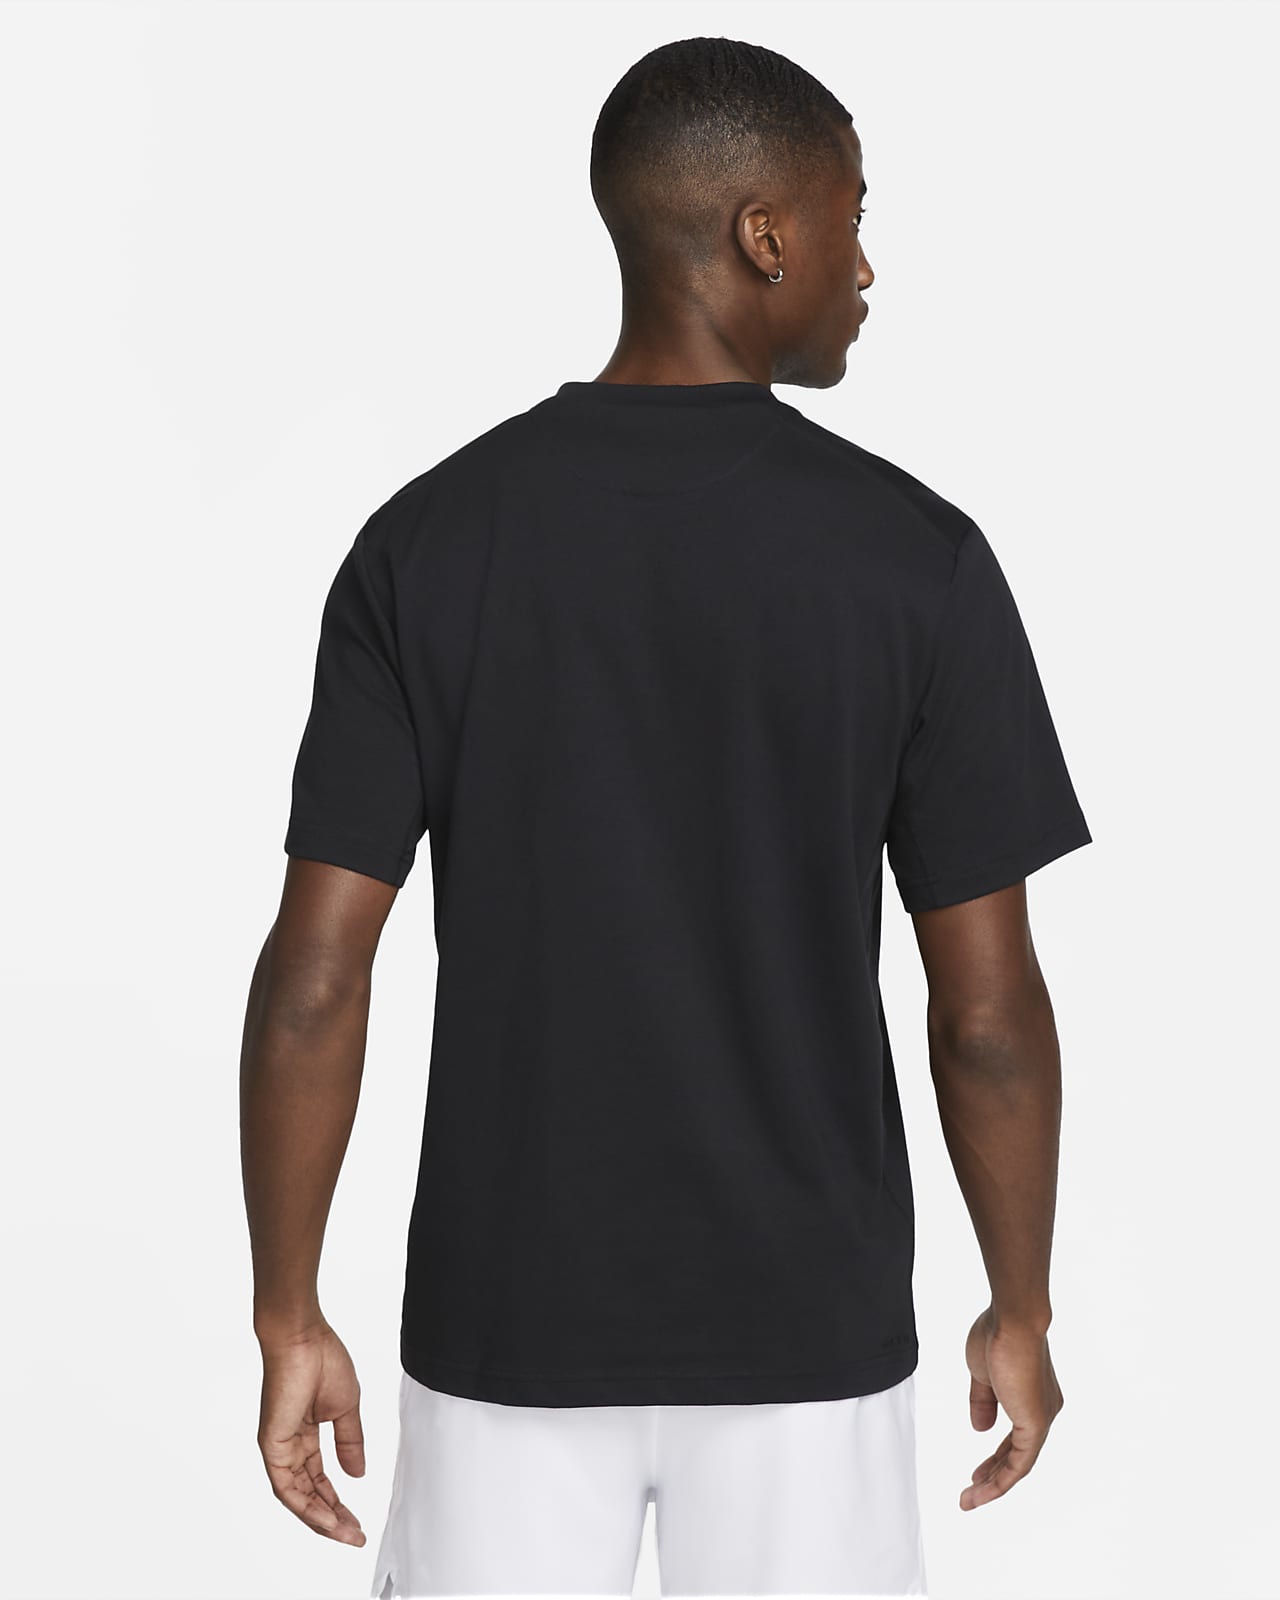 Nike Yoga Dri-FIT Short Sleeve Top T Shirt Blue DH1927-499 Mens Size Medium  Tall